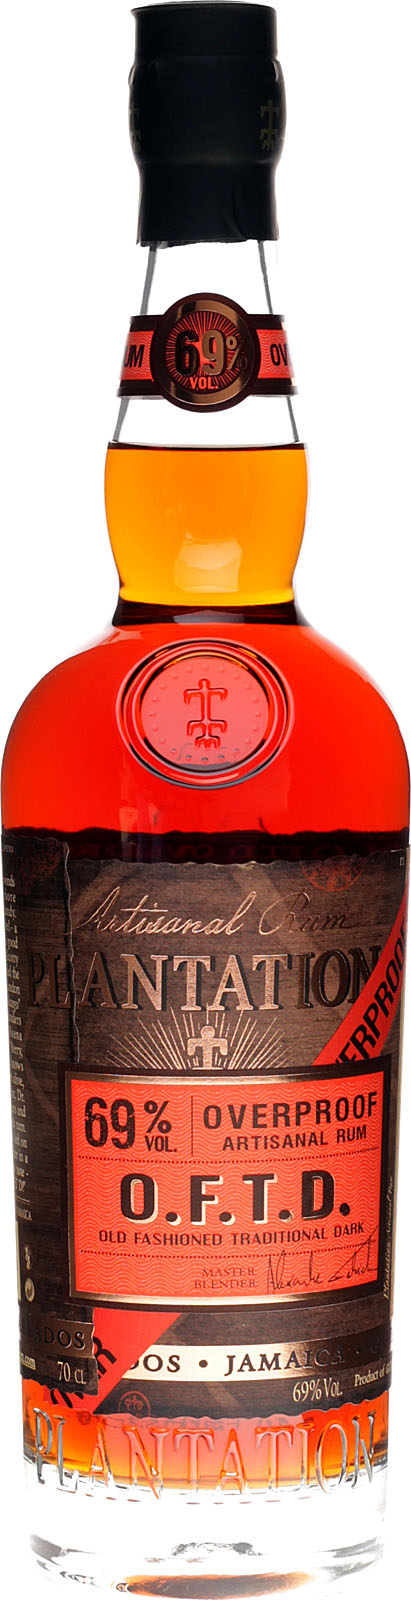 Plantation O.F.T.D. Overproof Rum aus Karibik der